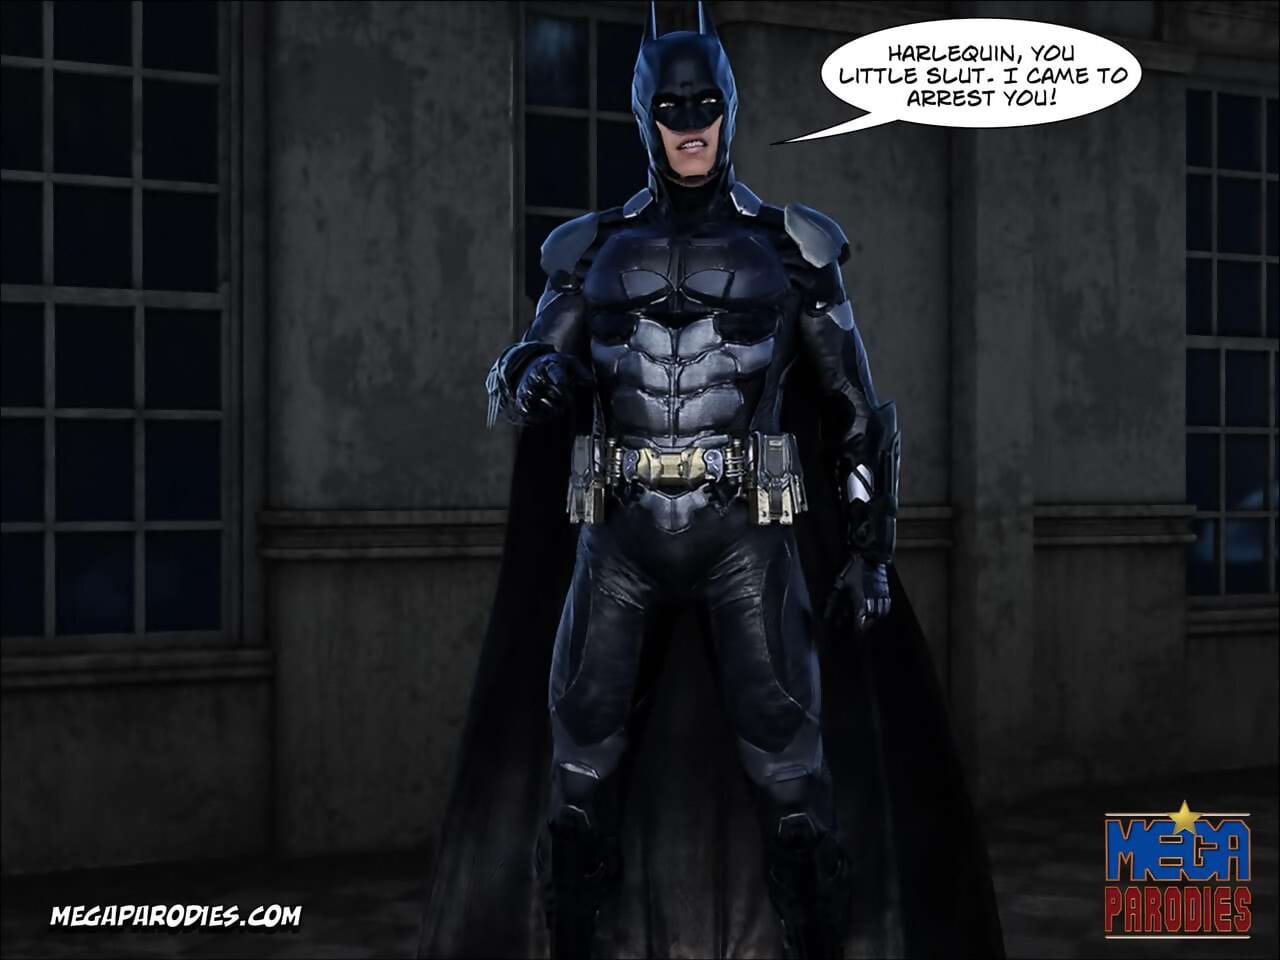 Mega parodias comics colección batman page 1